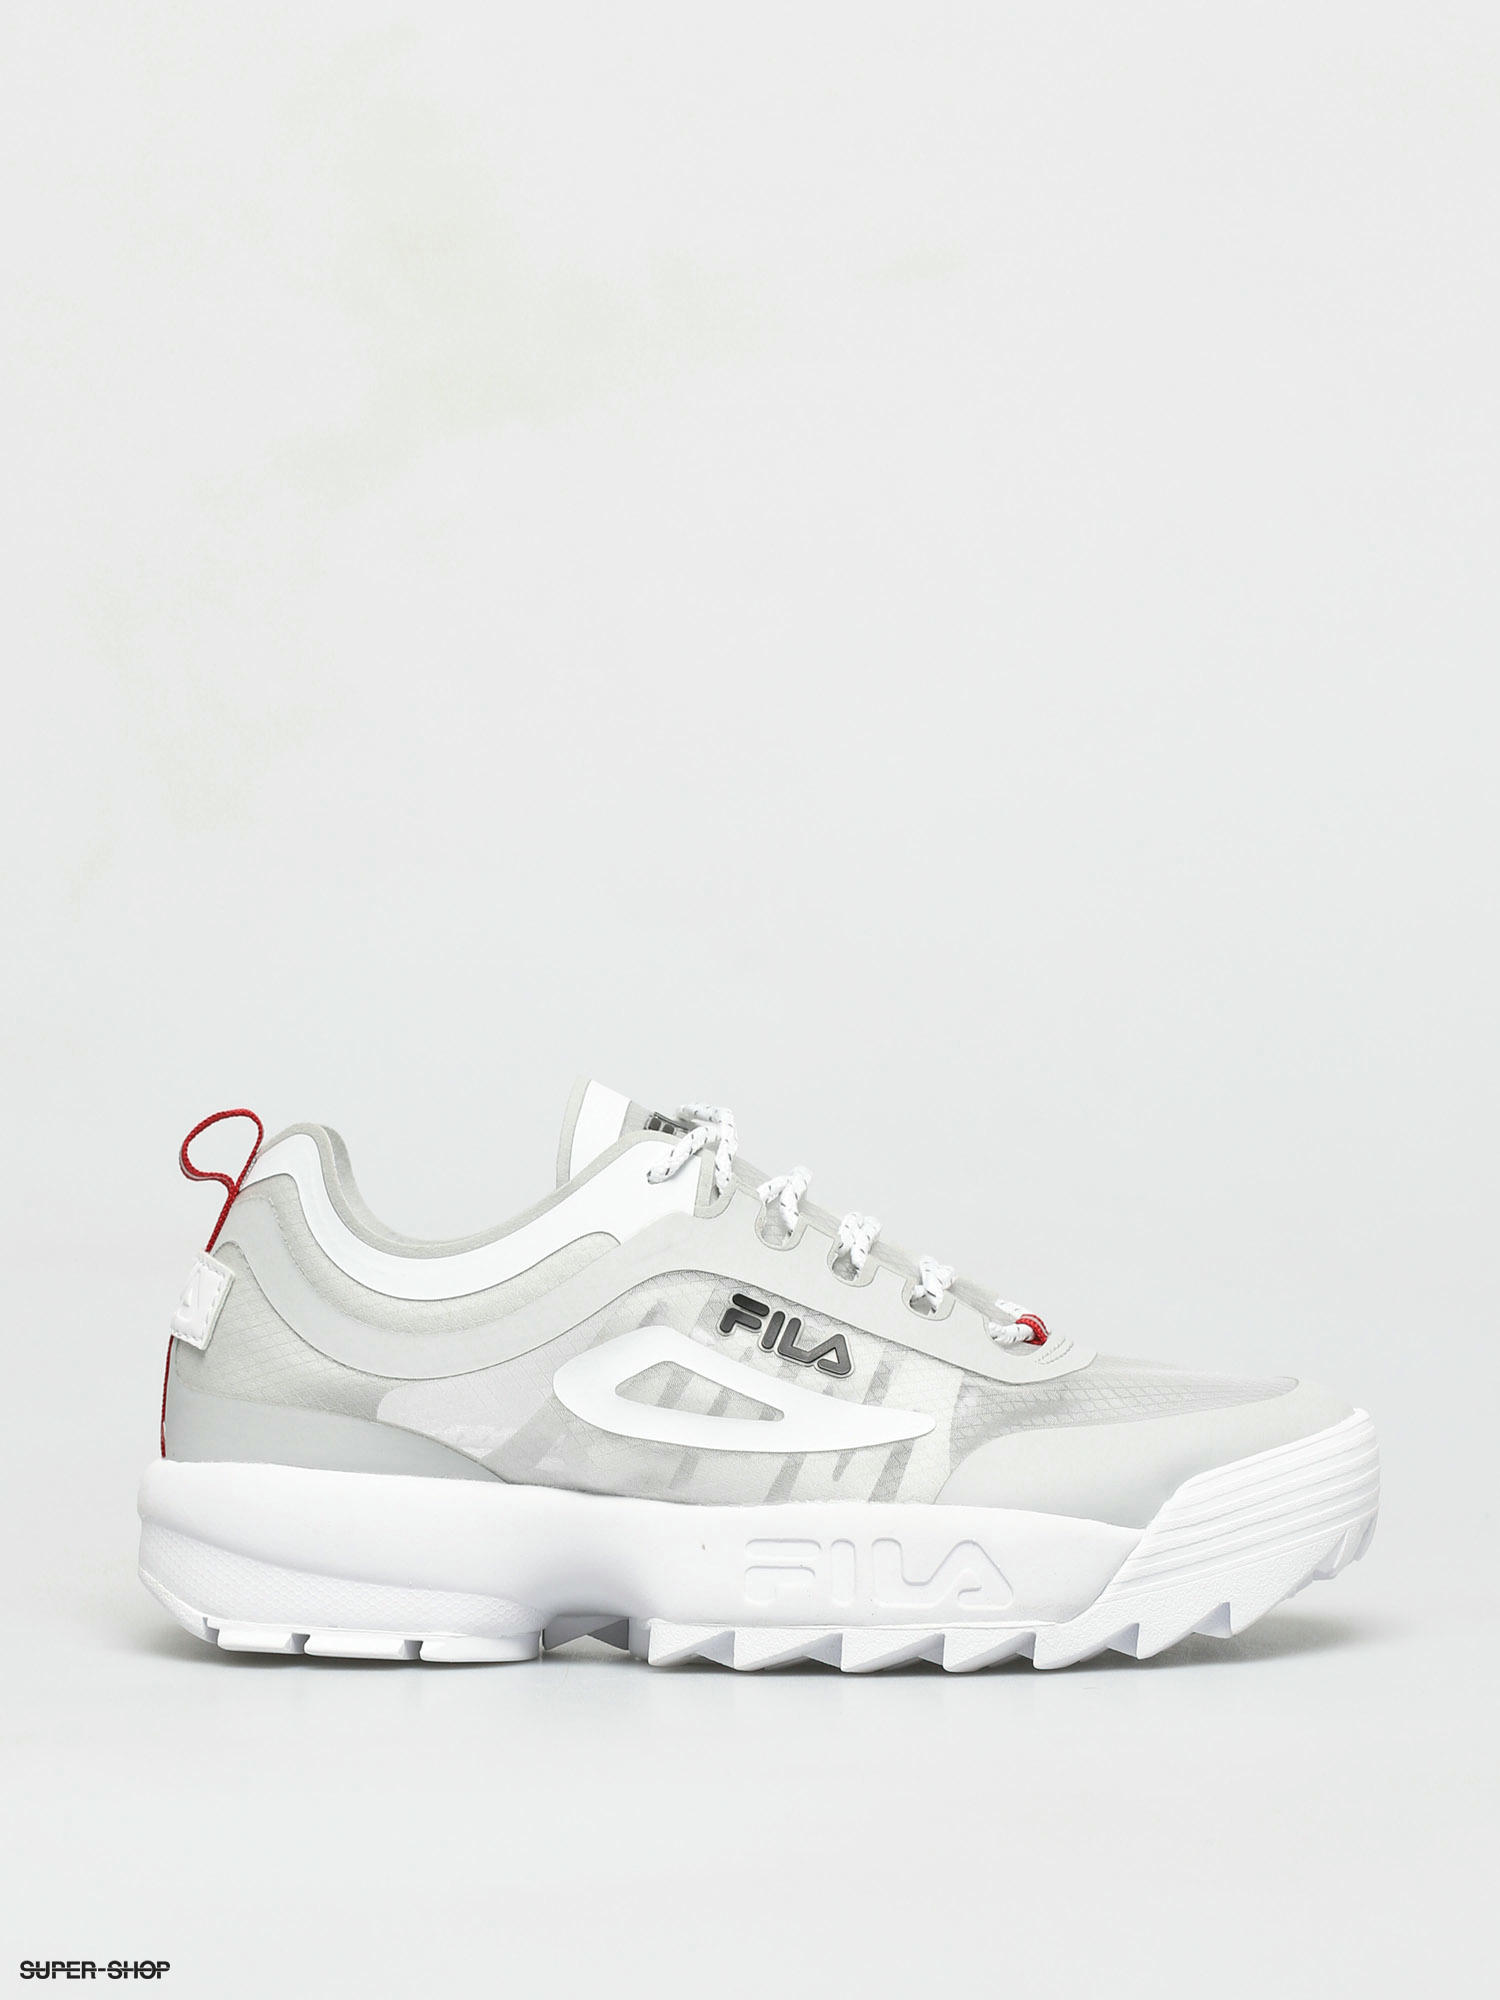 white fila running shoes